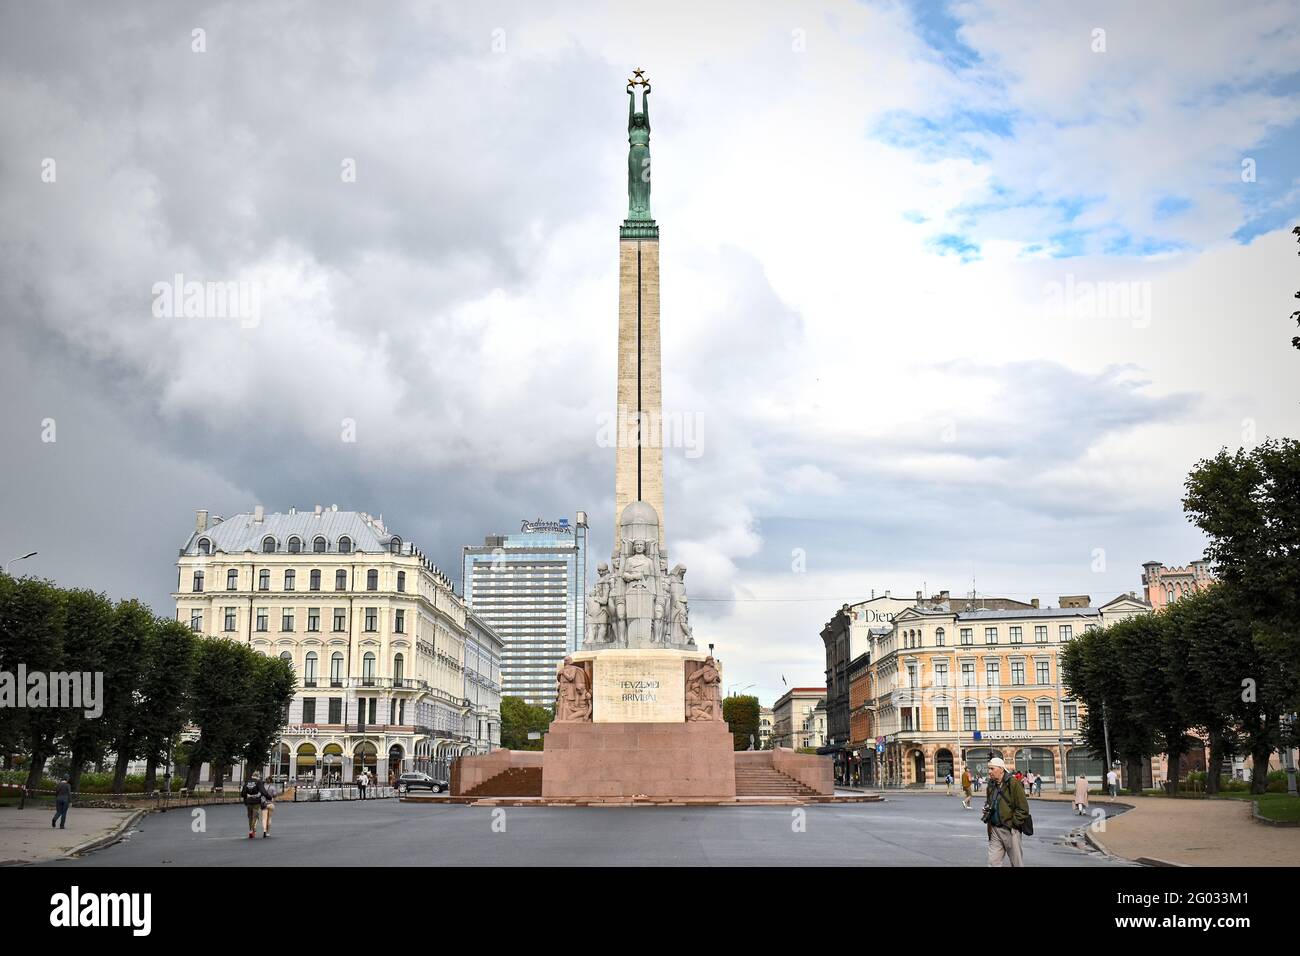 The Freedom Monument in Riga, Latvia (2020) Stock Photo